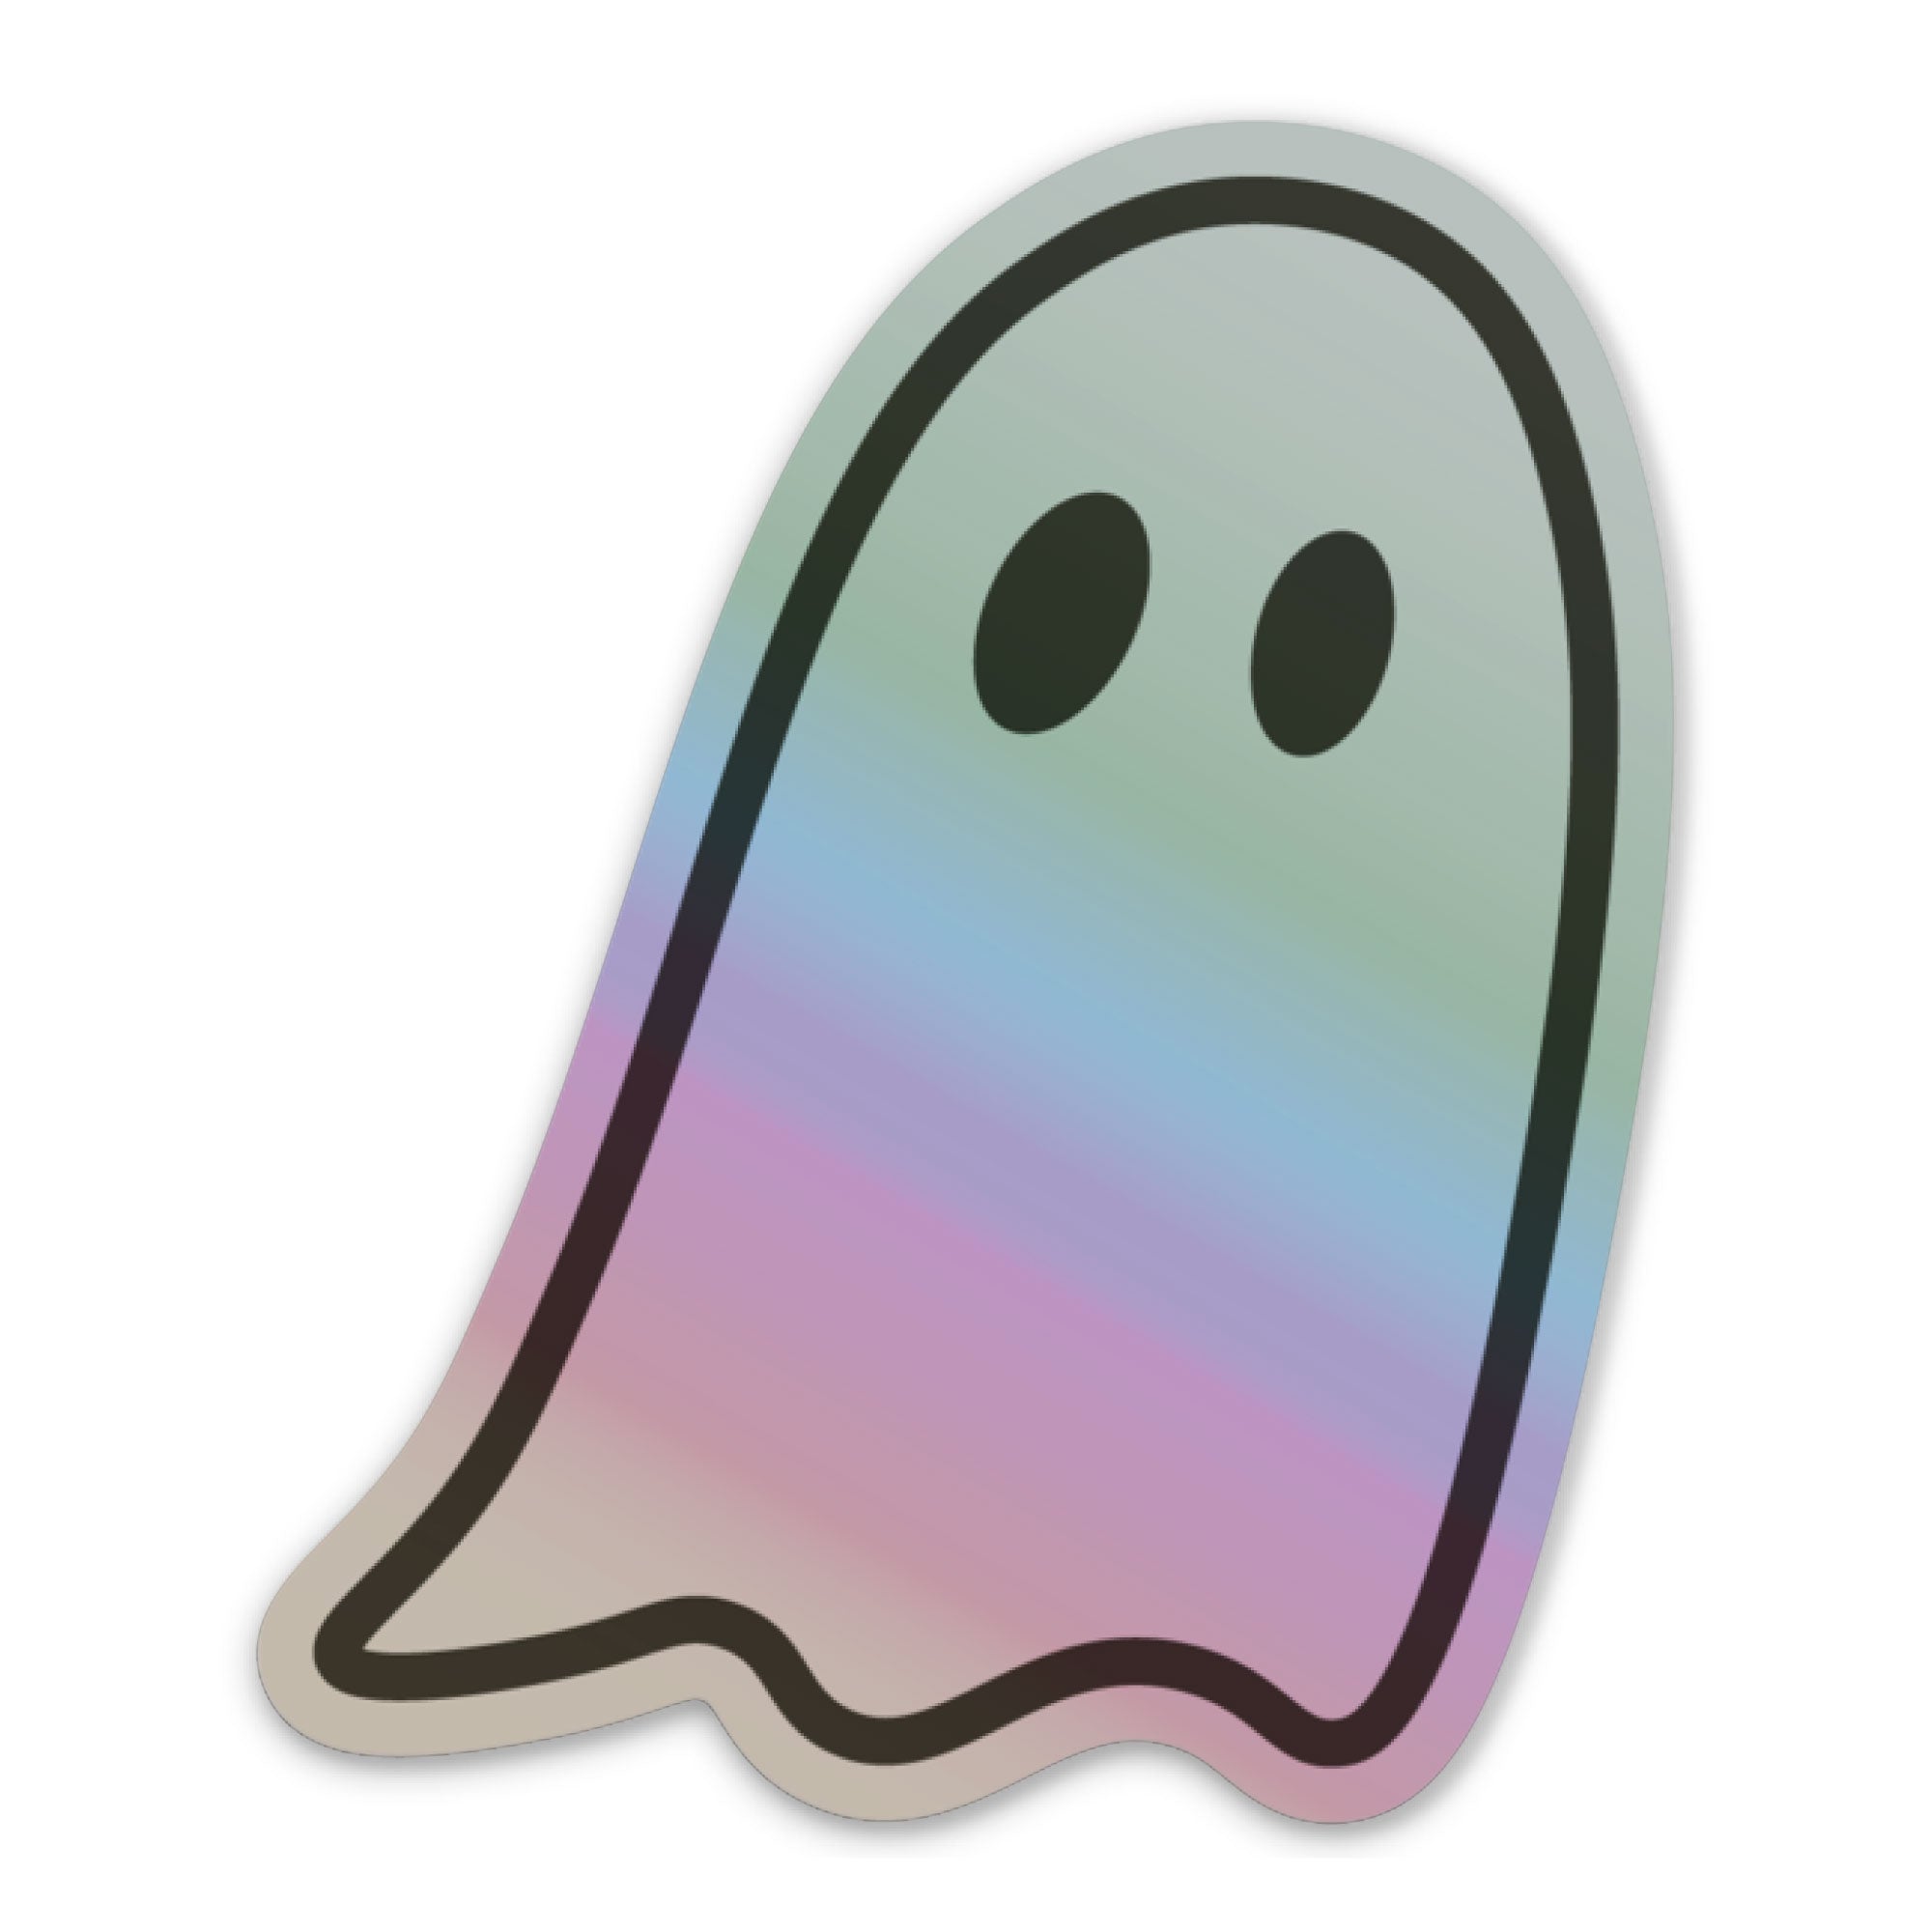 Holographic Ghost Vinyl Sticker